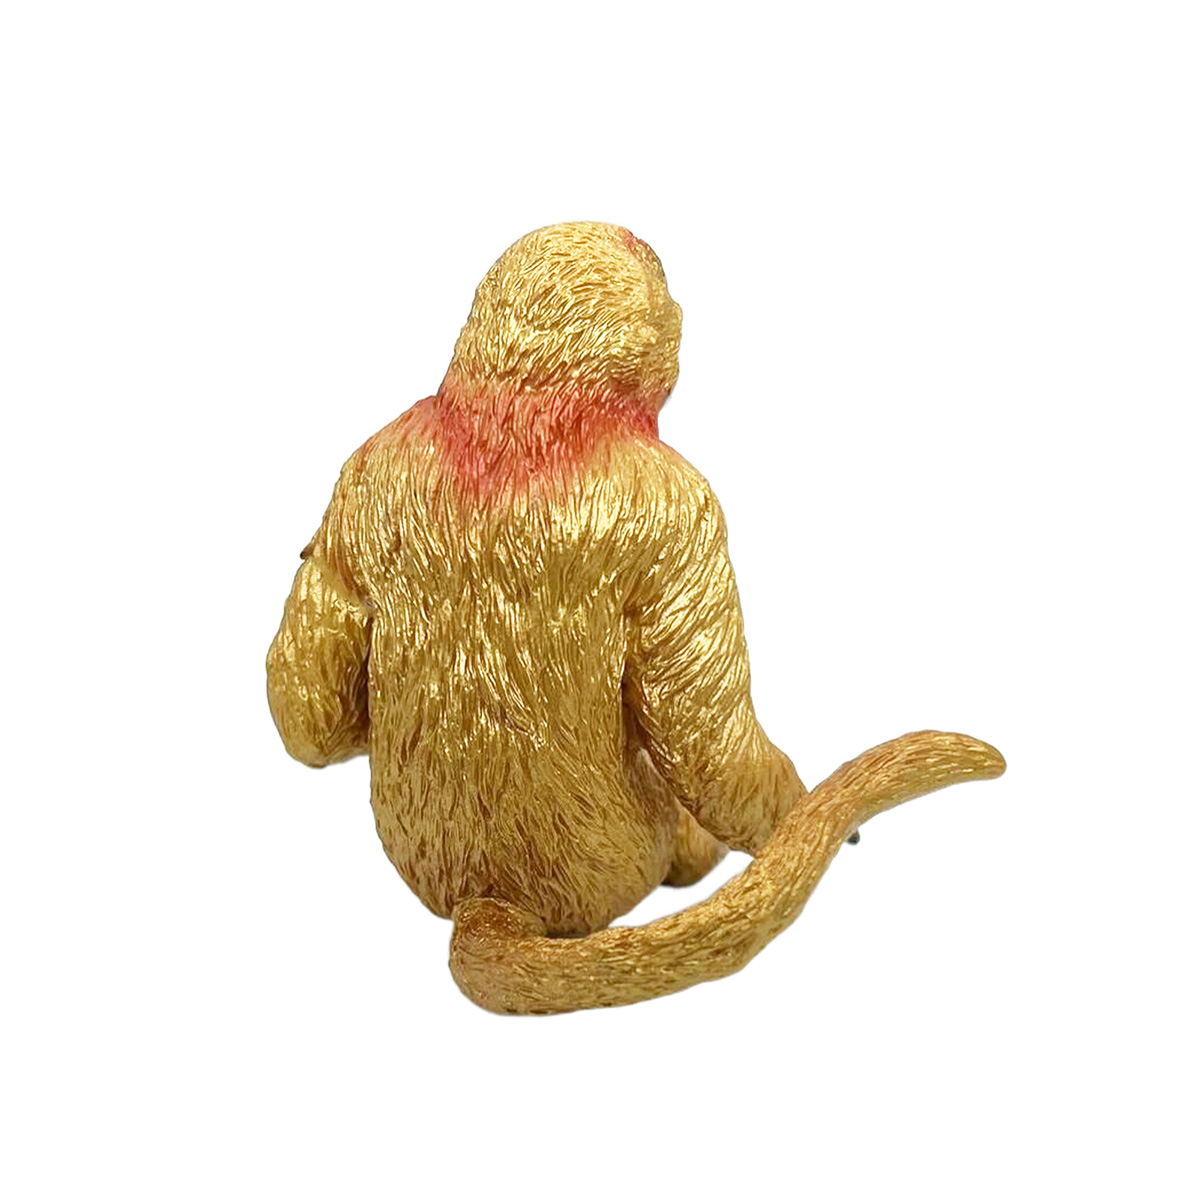 Новогодний костюм обезьяны своими руками